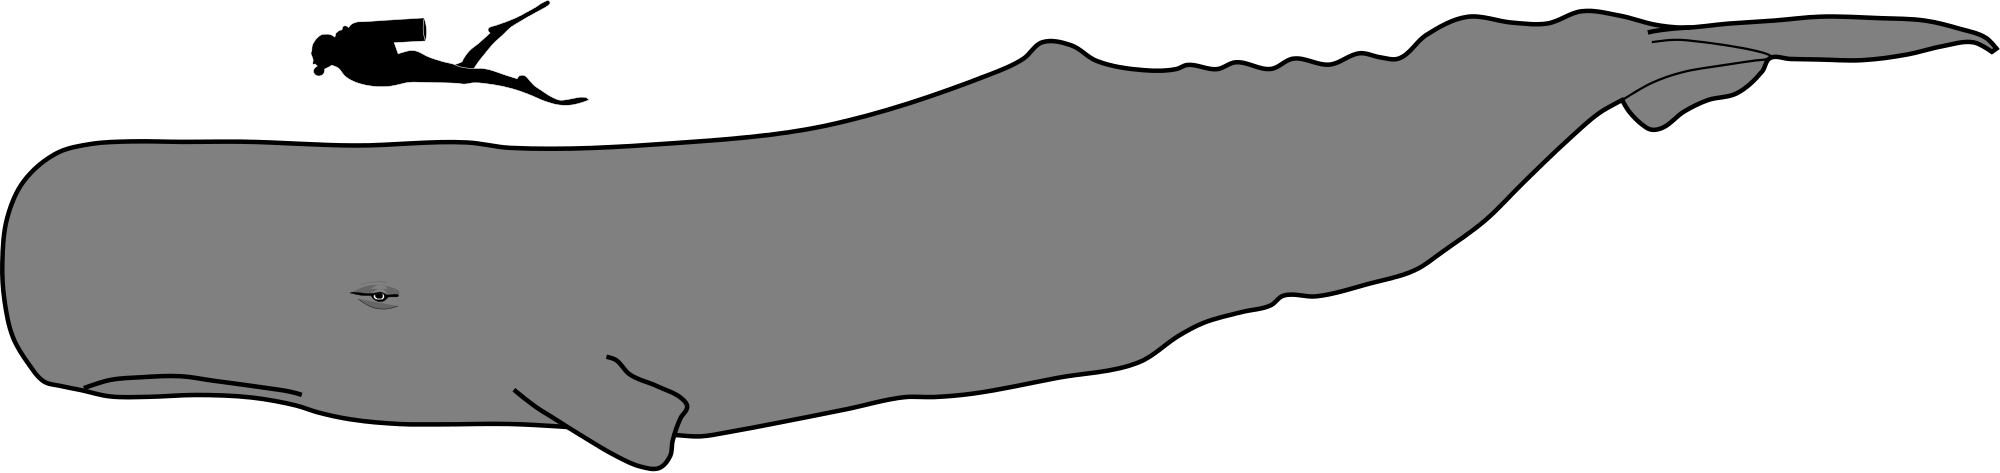 Open - Sperm Whale Vs Human (2000x473)